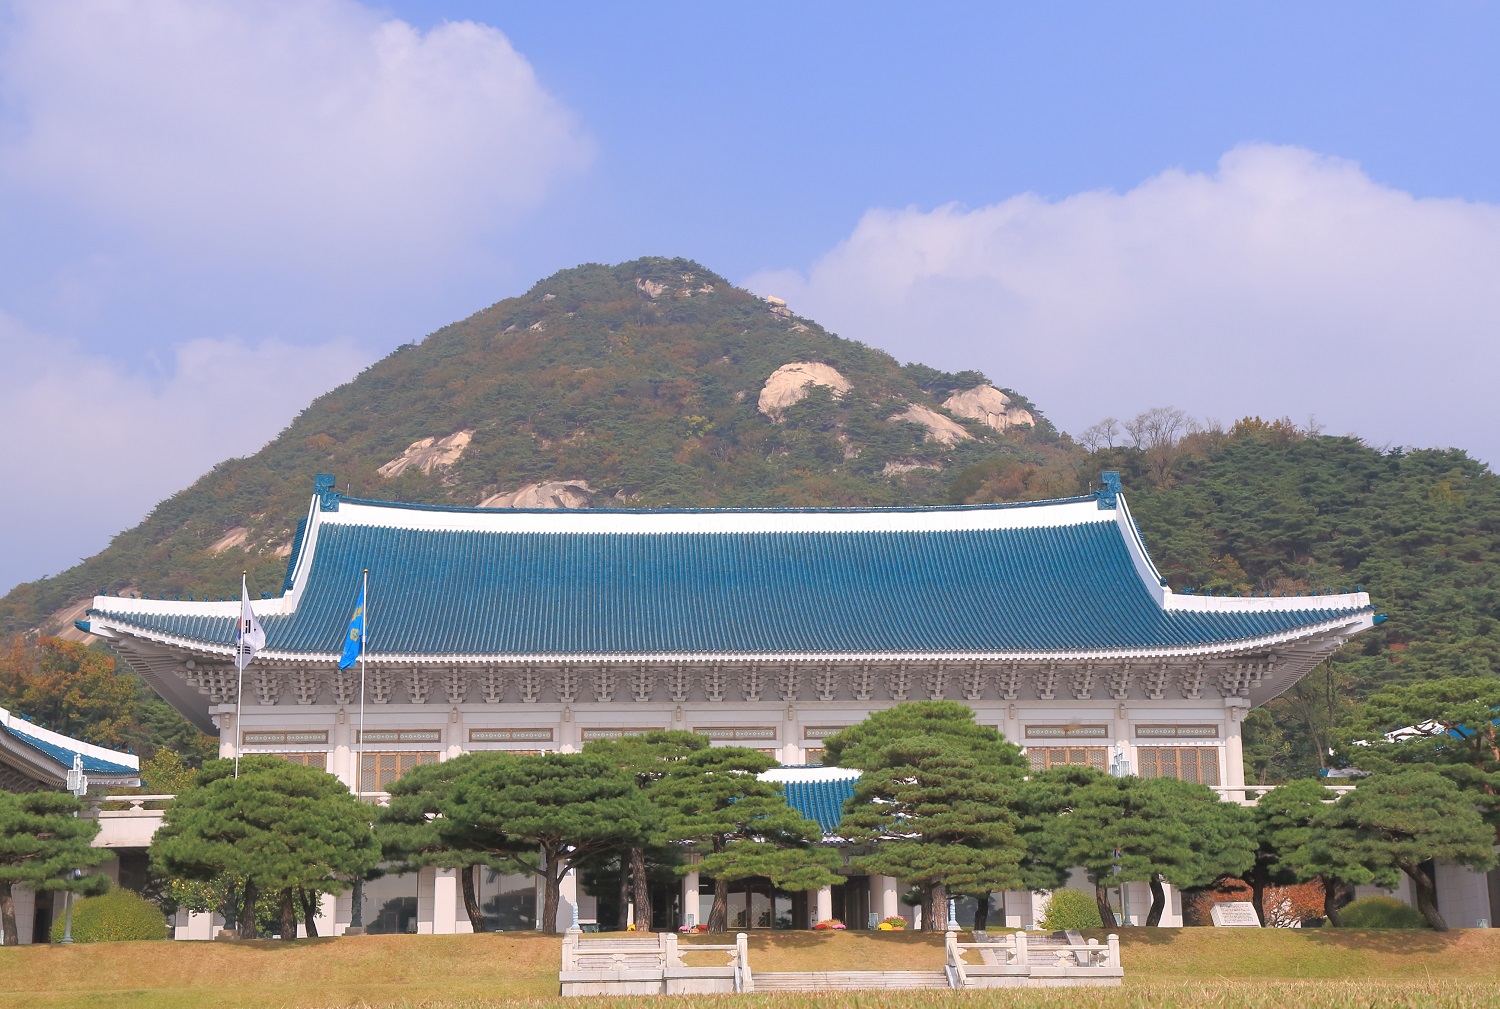 The Blue House, the Seoul Korean presidential office in Seoul.